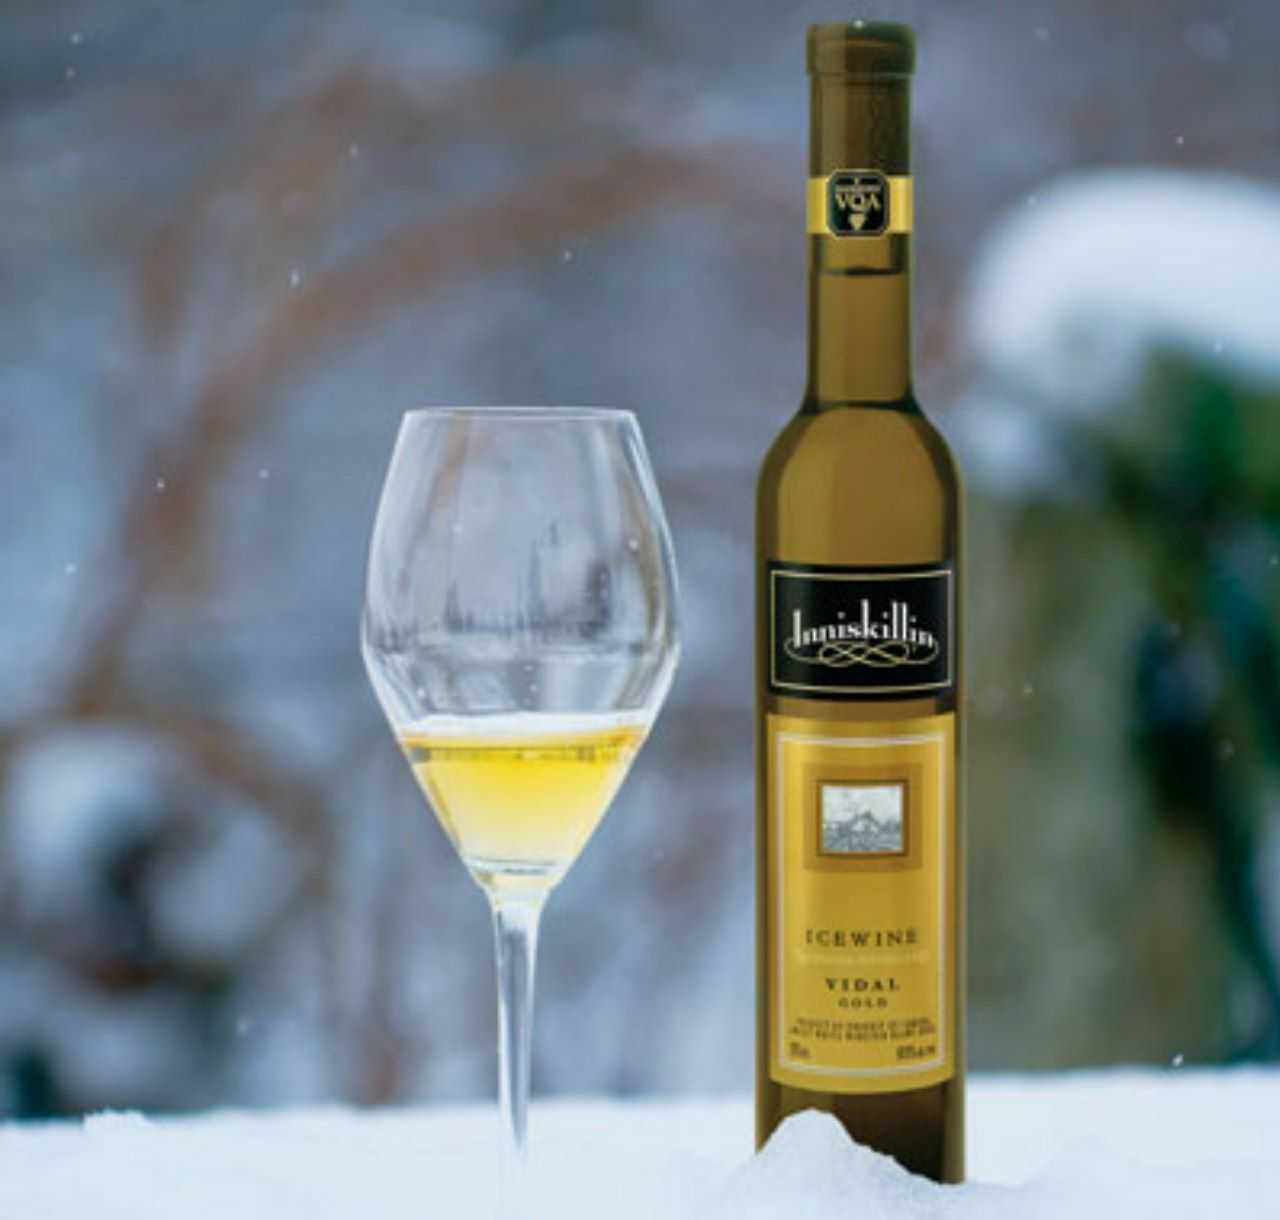 Ледяное вино - ice wine